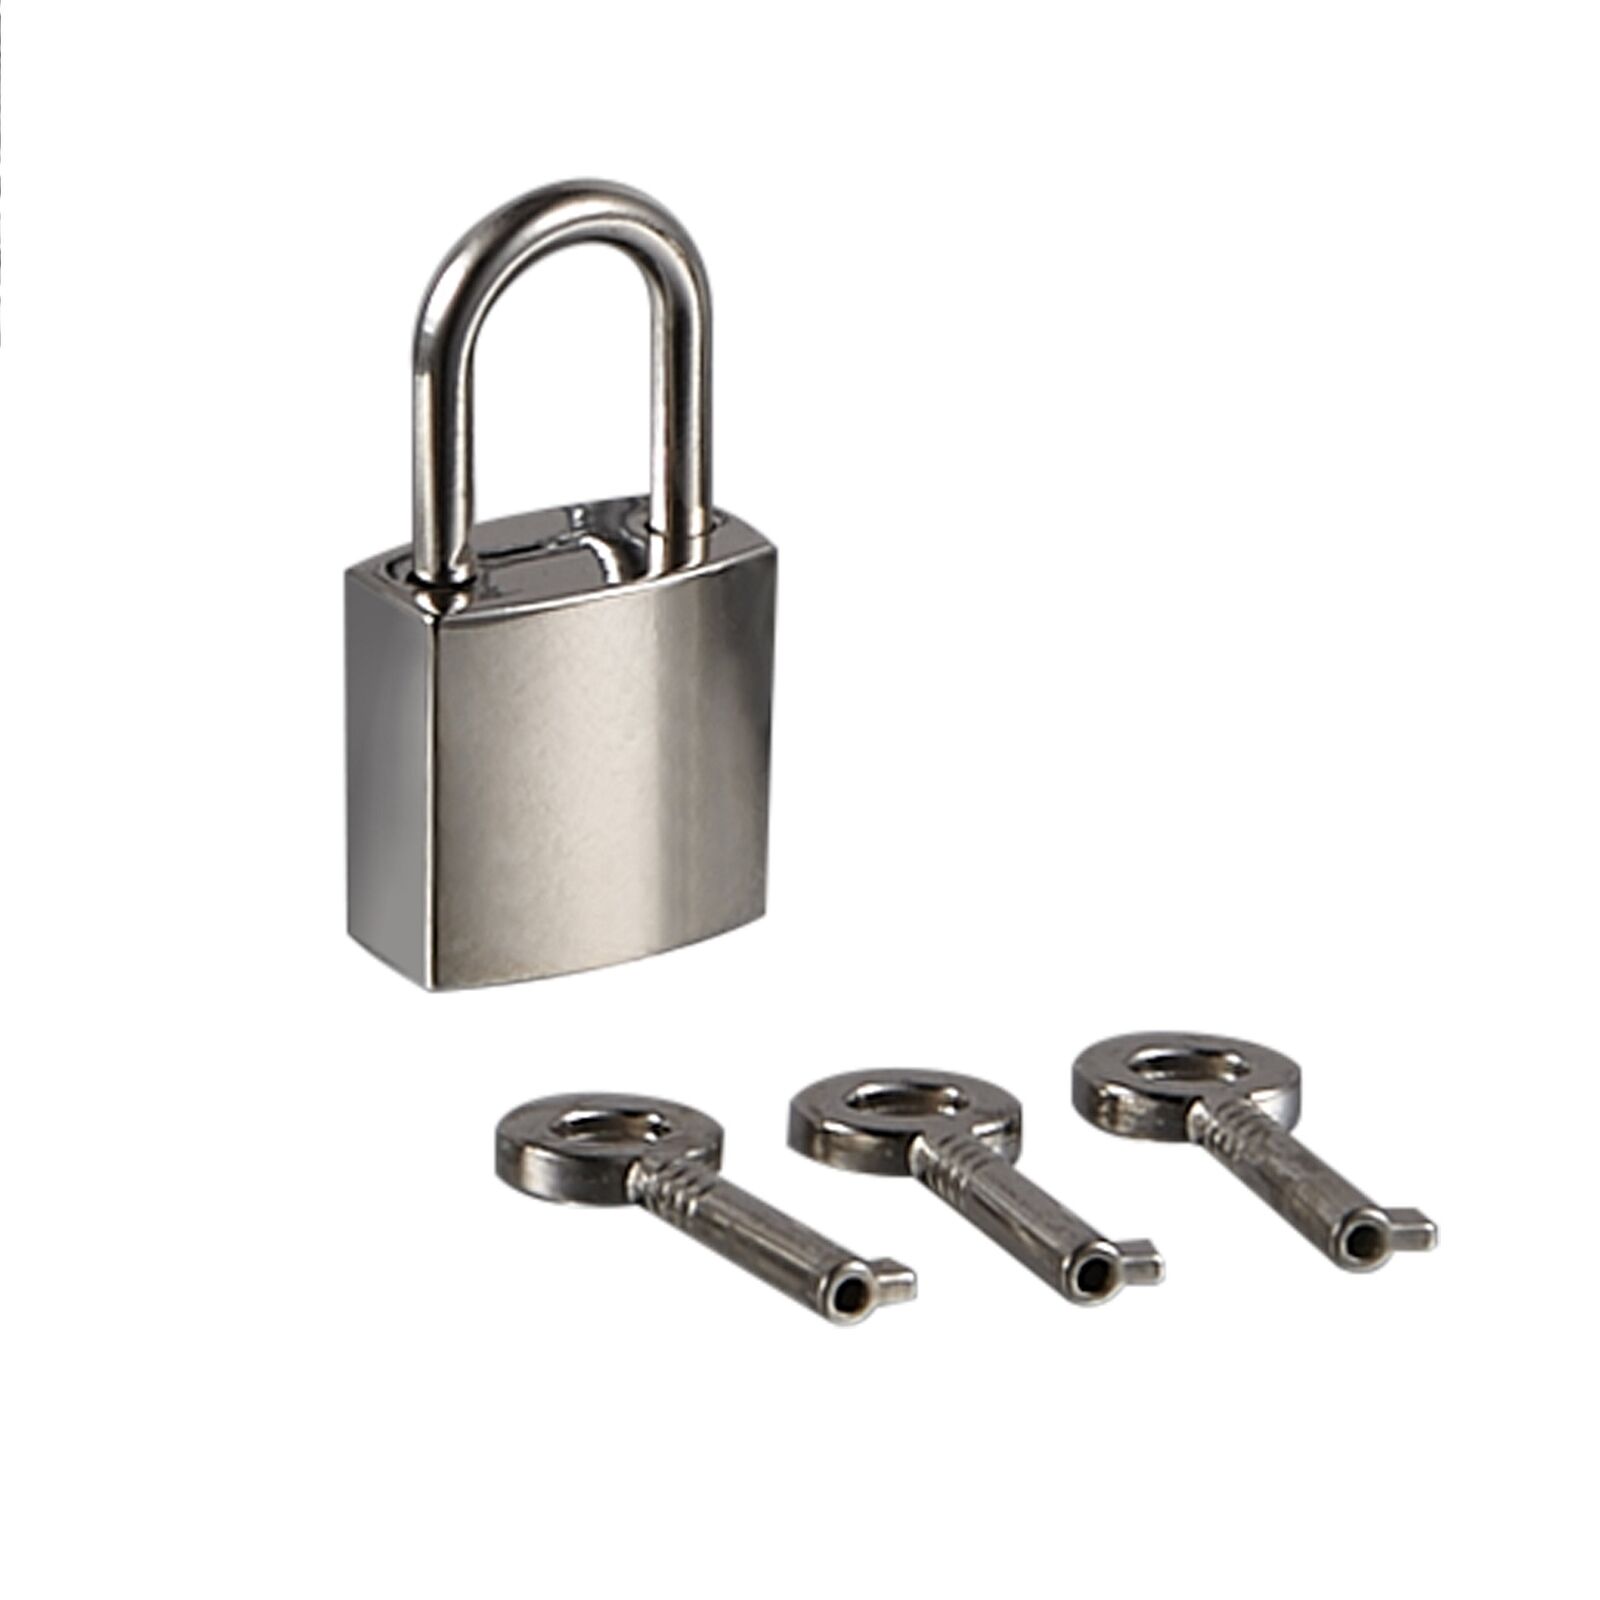 Mini Metal Lock - Zinc Replacement Pad-Lock with Keys, Mirror Glossy (Silver)